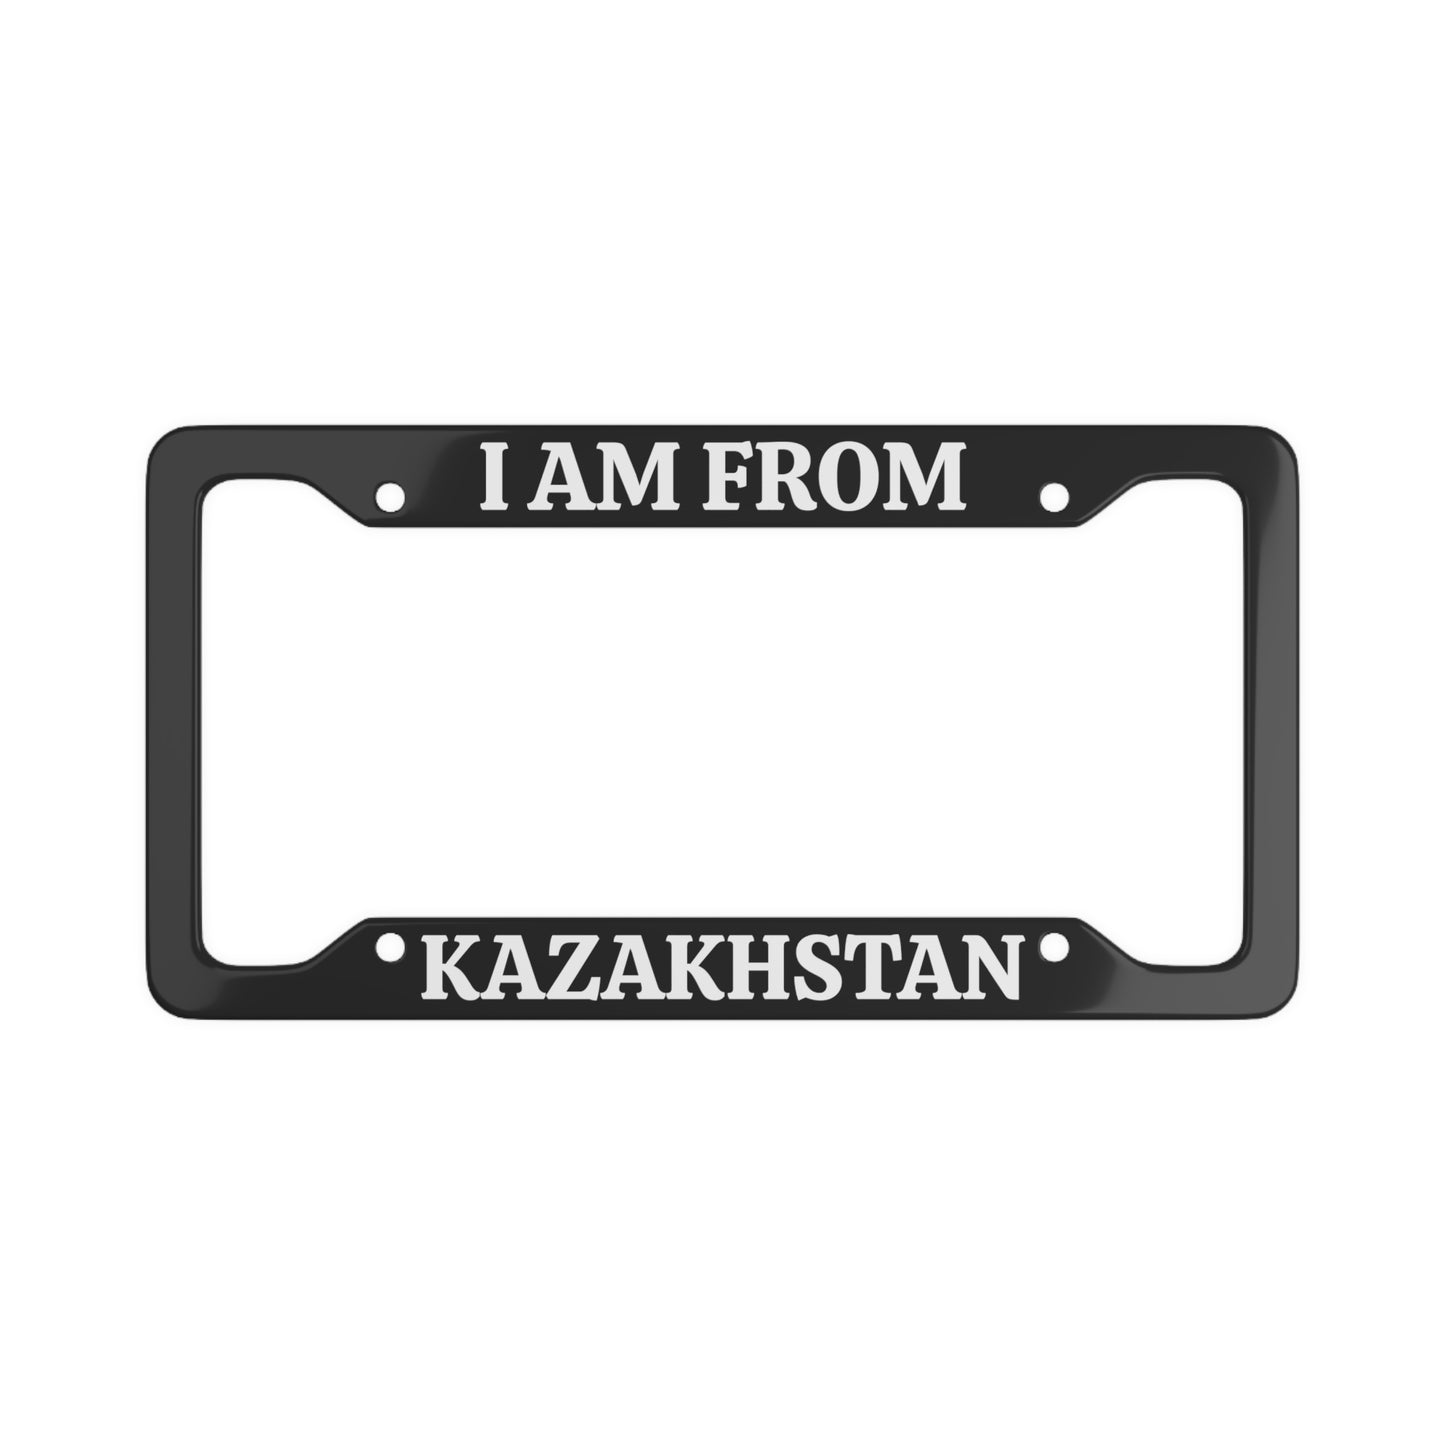 I AM FROM KAZAKHSTAN License Plate Frame